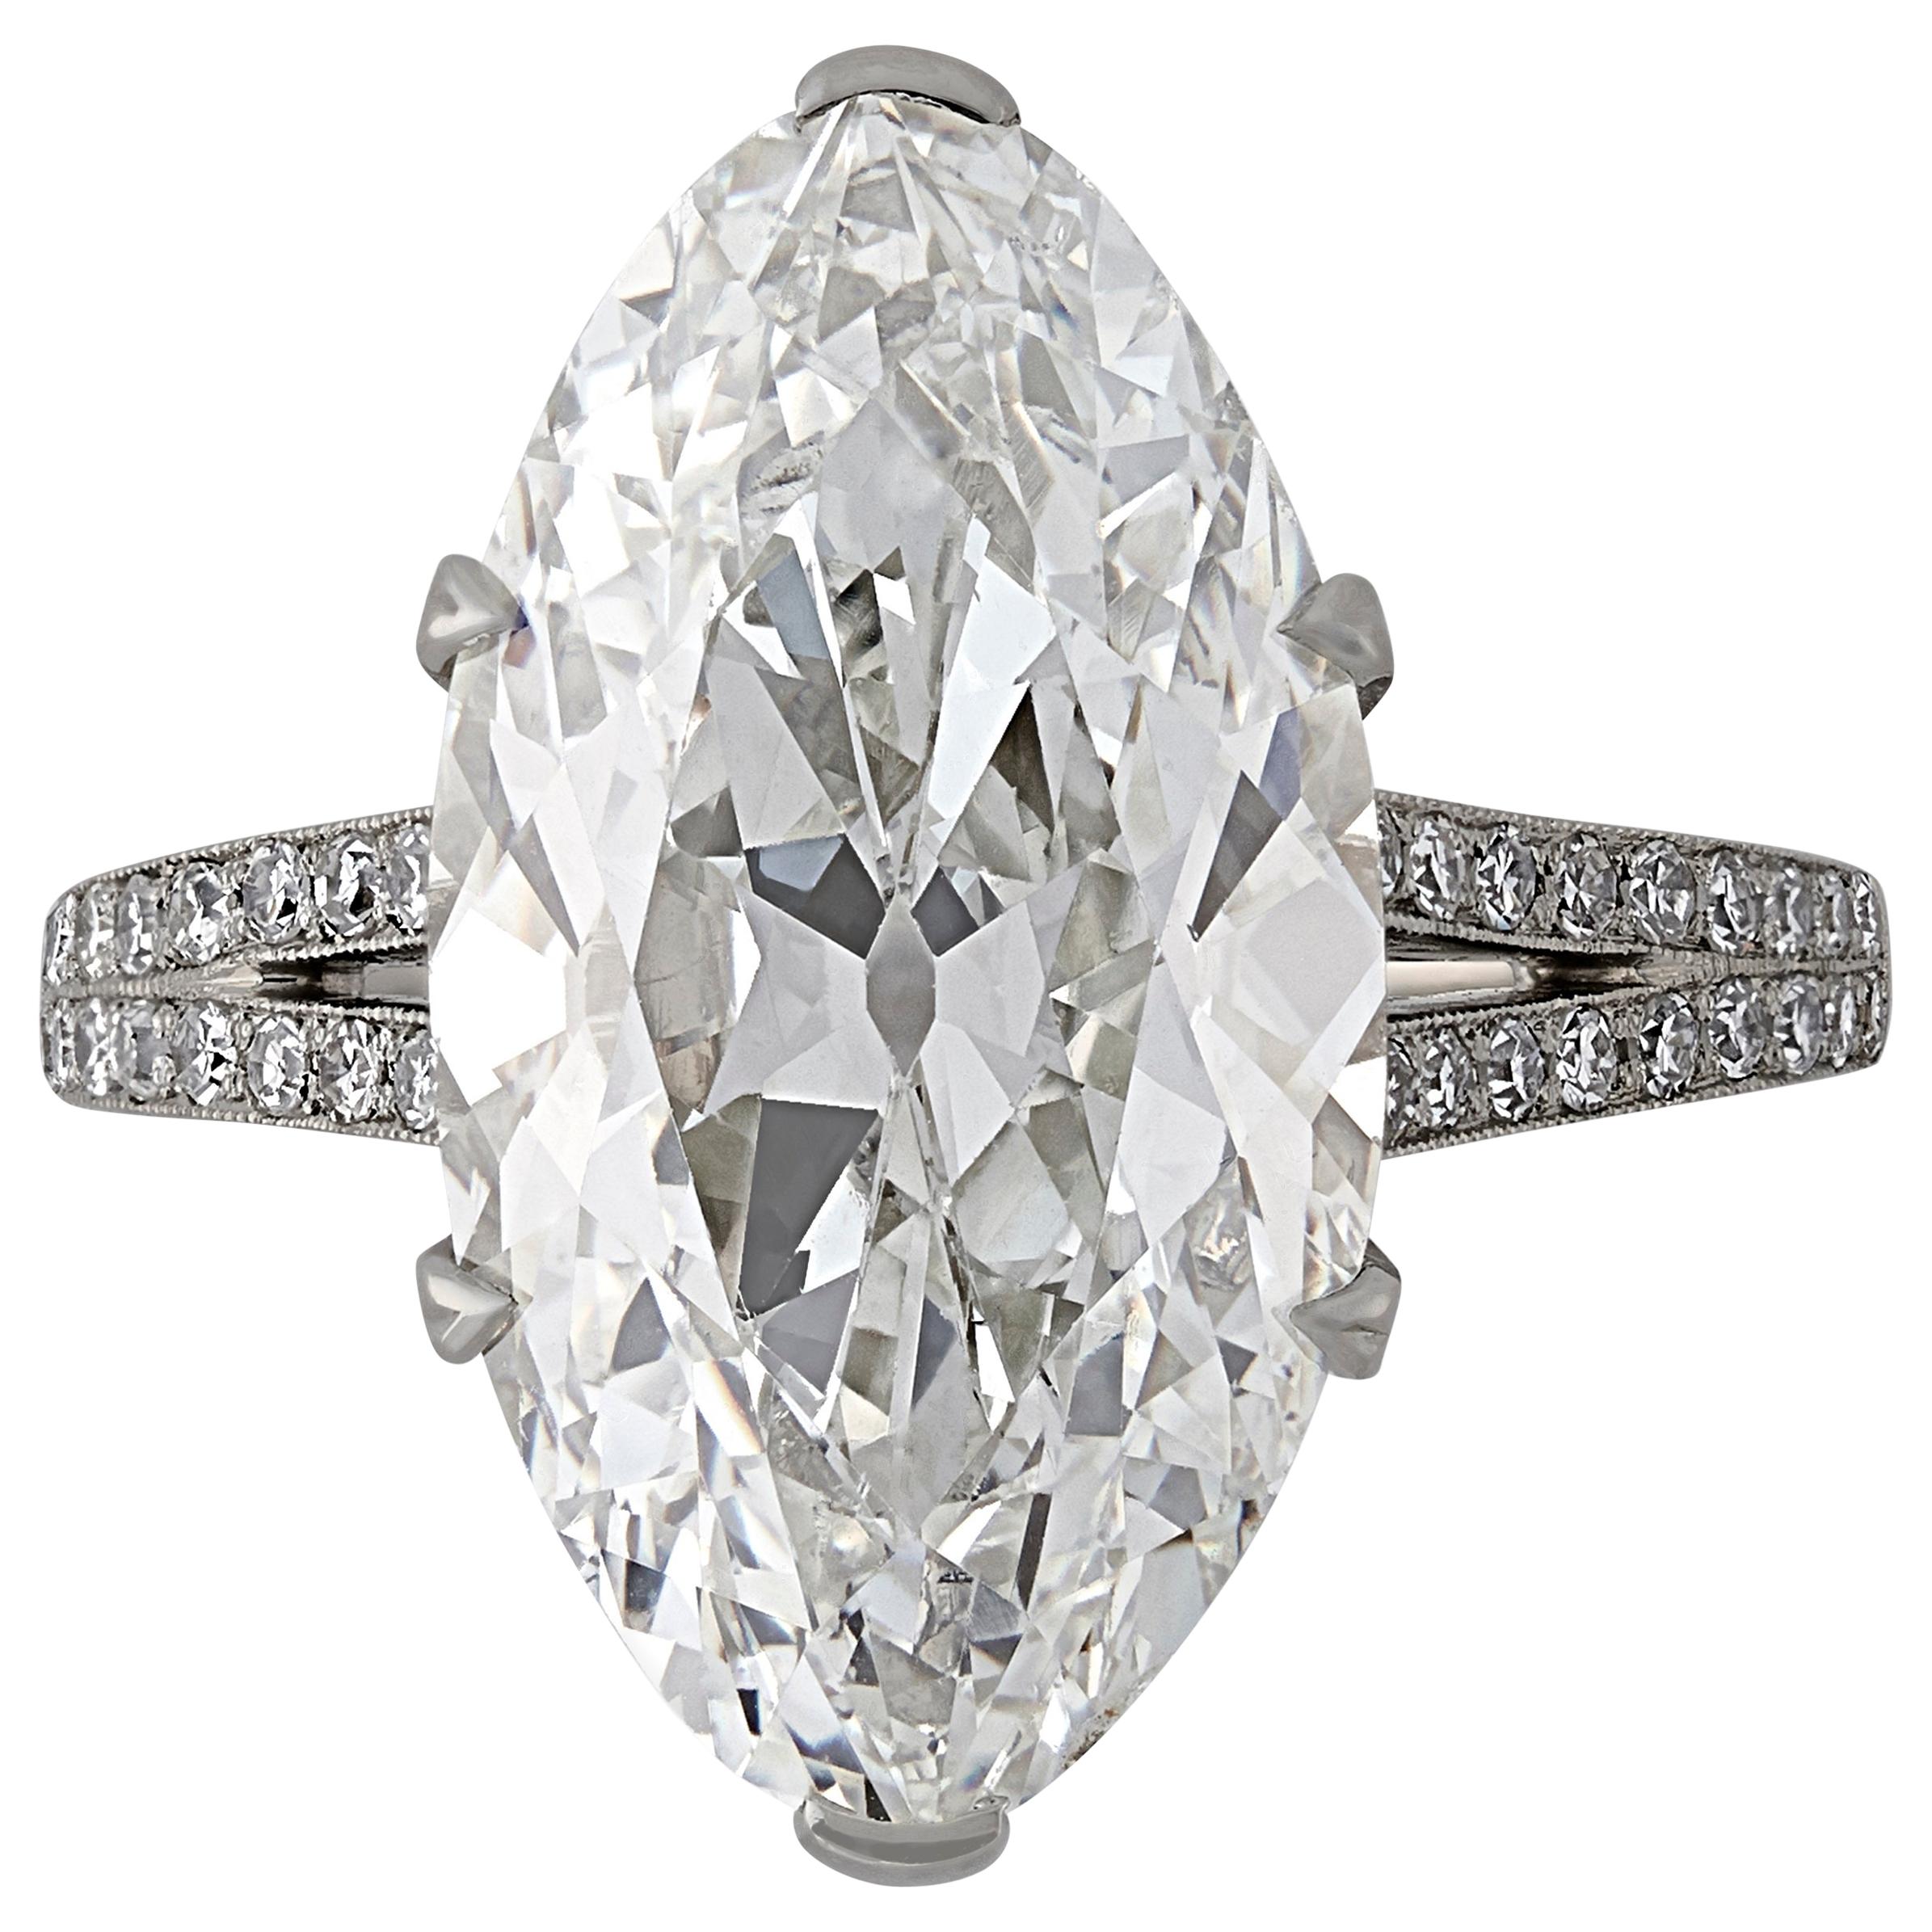 8.31 Carat H SI1 Moval Diamond Ring with Elegant Diamond Setting by Hancocks